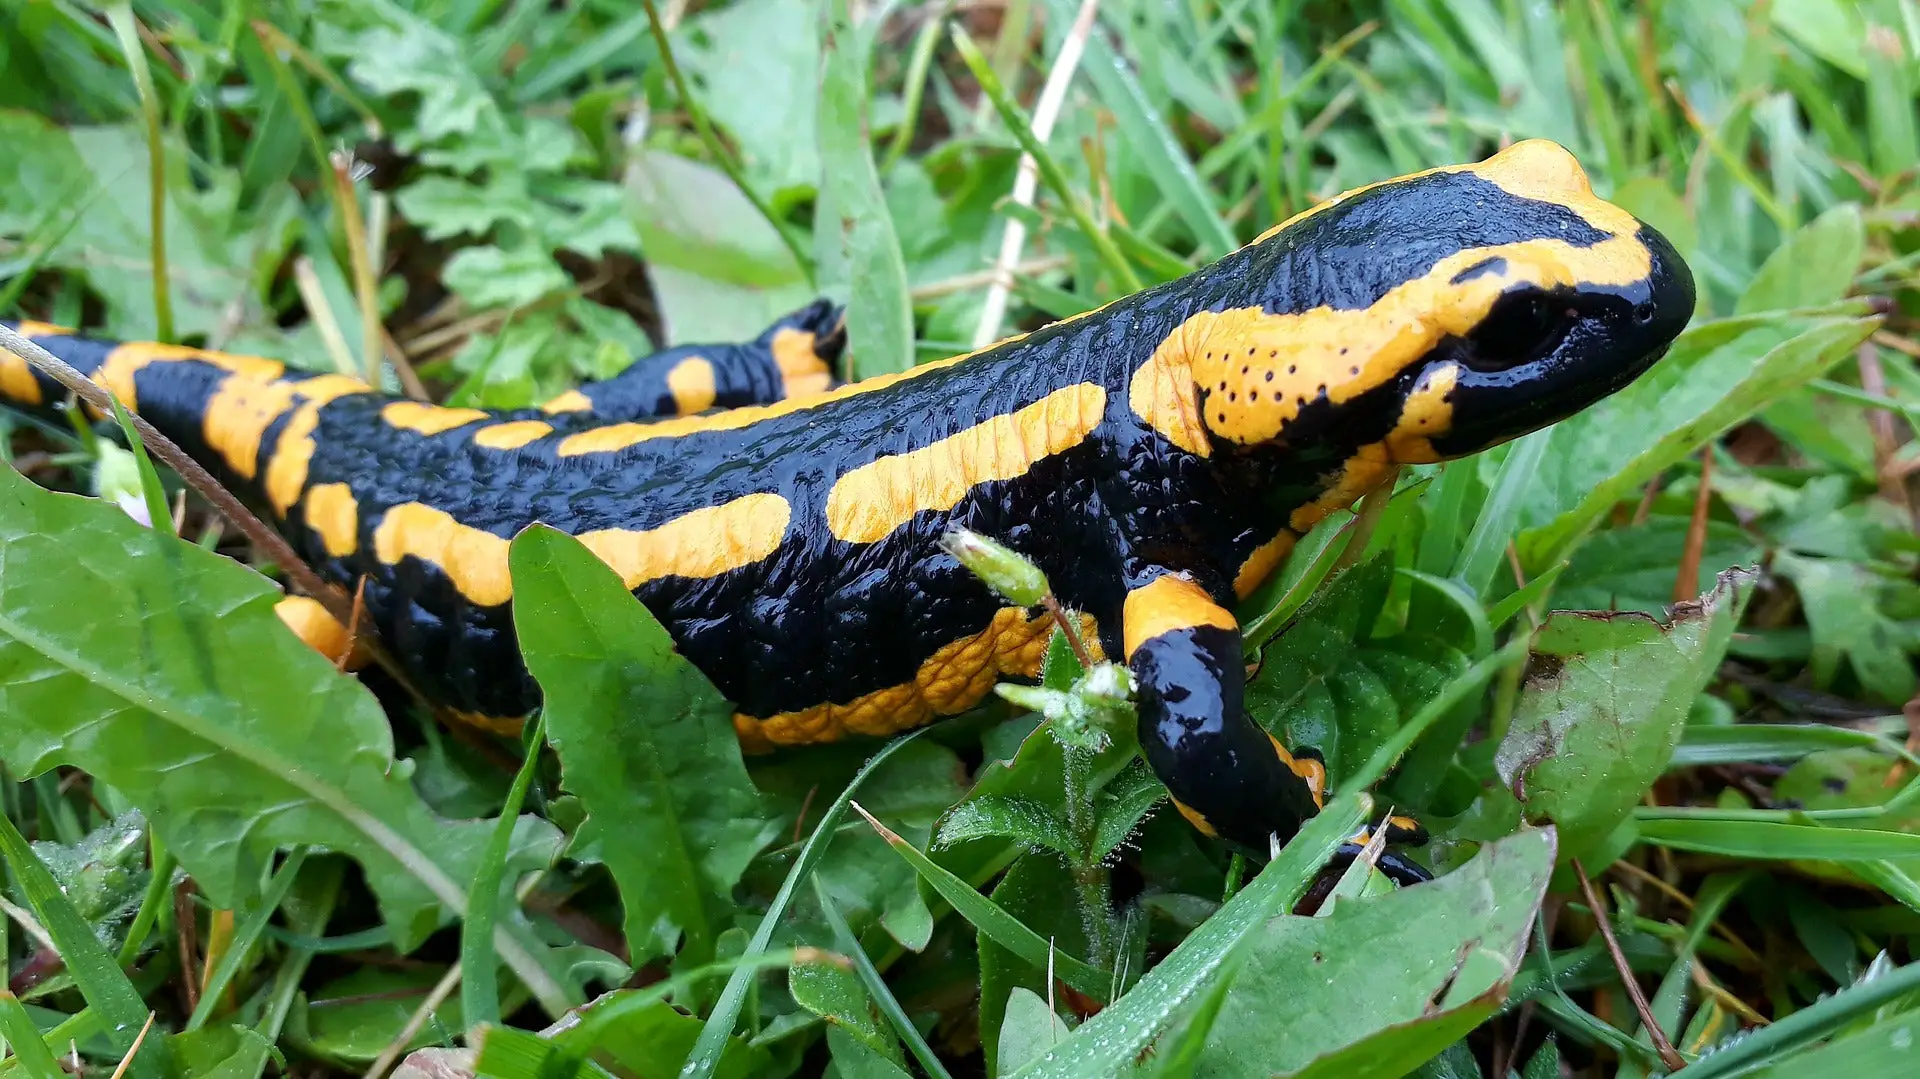 Salamandra na Grama 